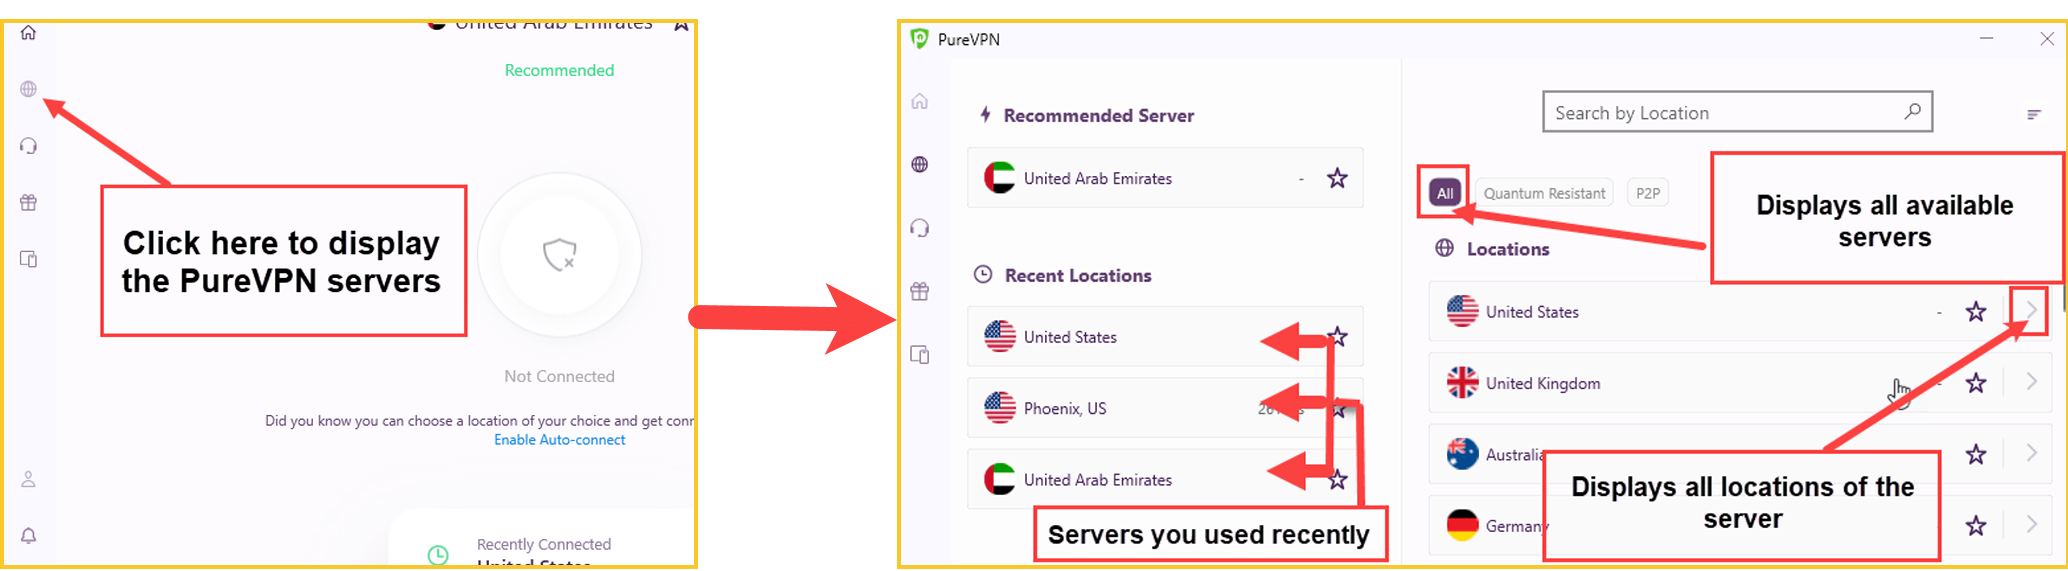 purevpn-server-locations-interface-in-New Zealand